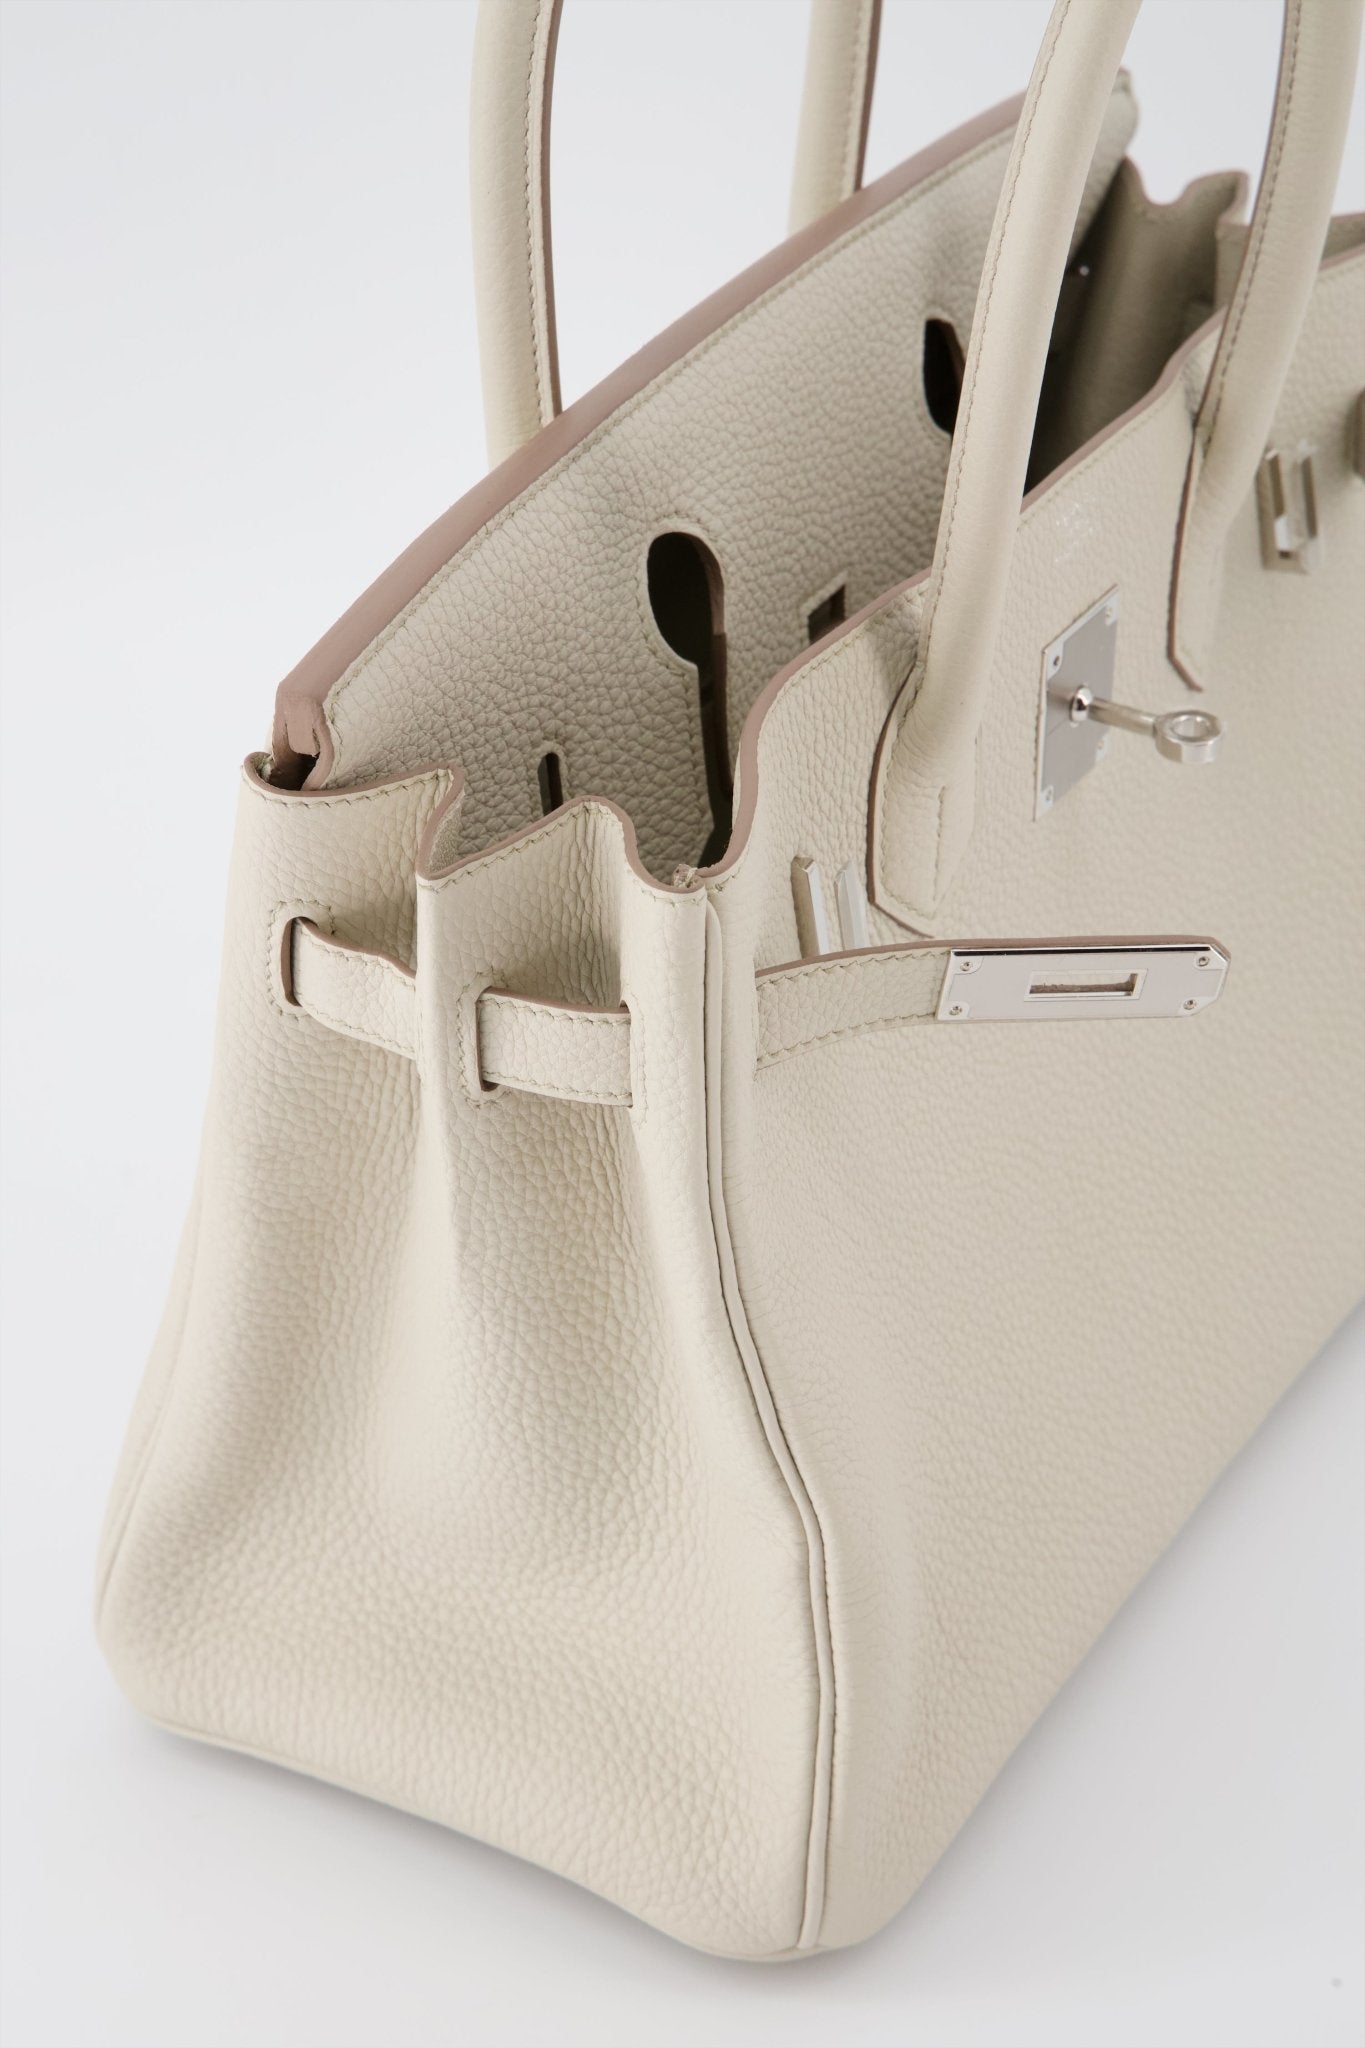 Women's Hermes Birkin Bag 30cm Craie Togo Leather Handbag Sale